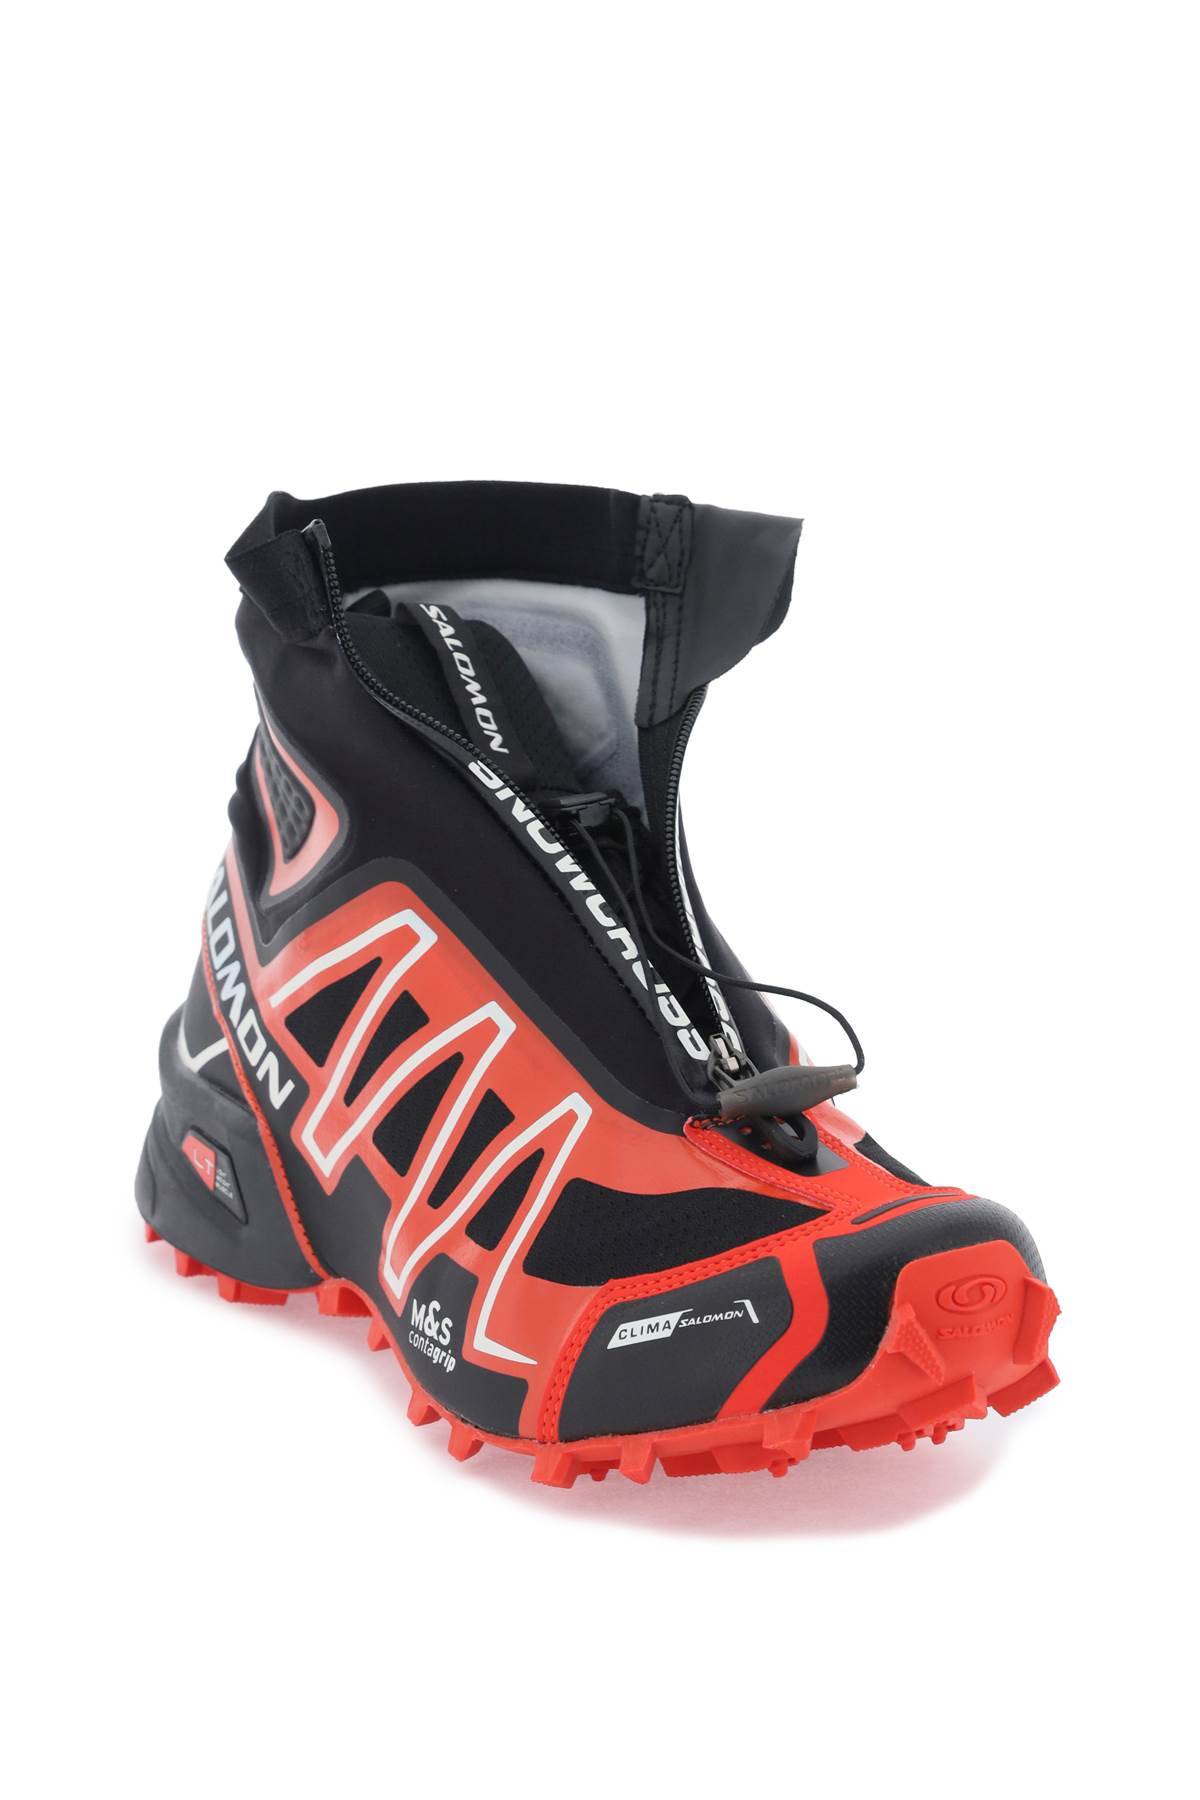 Shop Salomon Snowcross Sneakers In Black,red